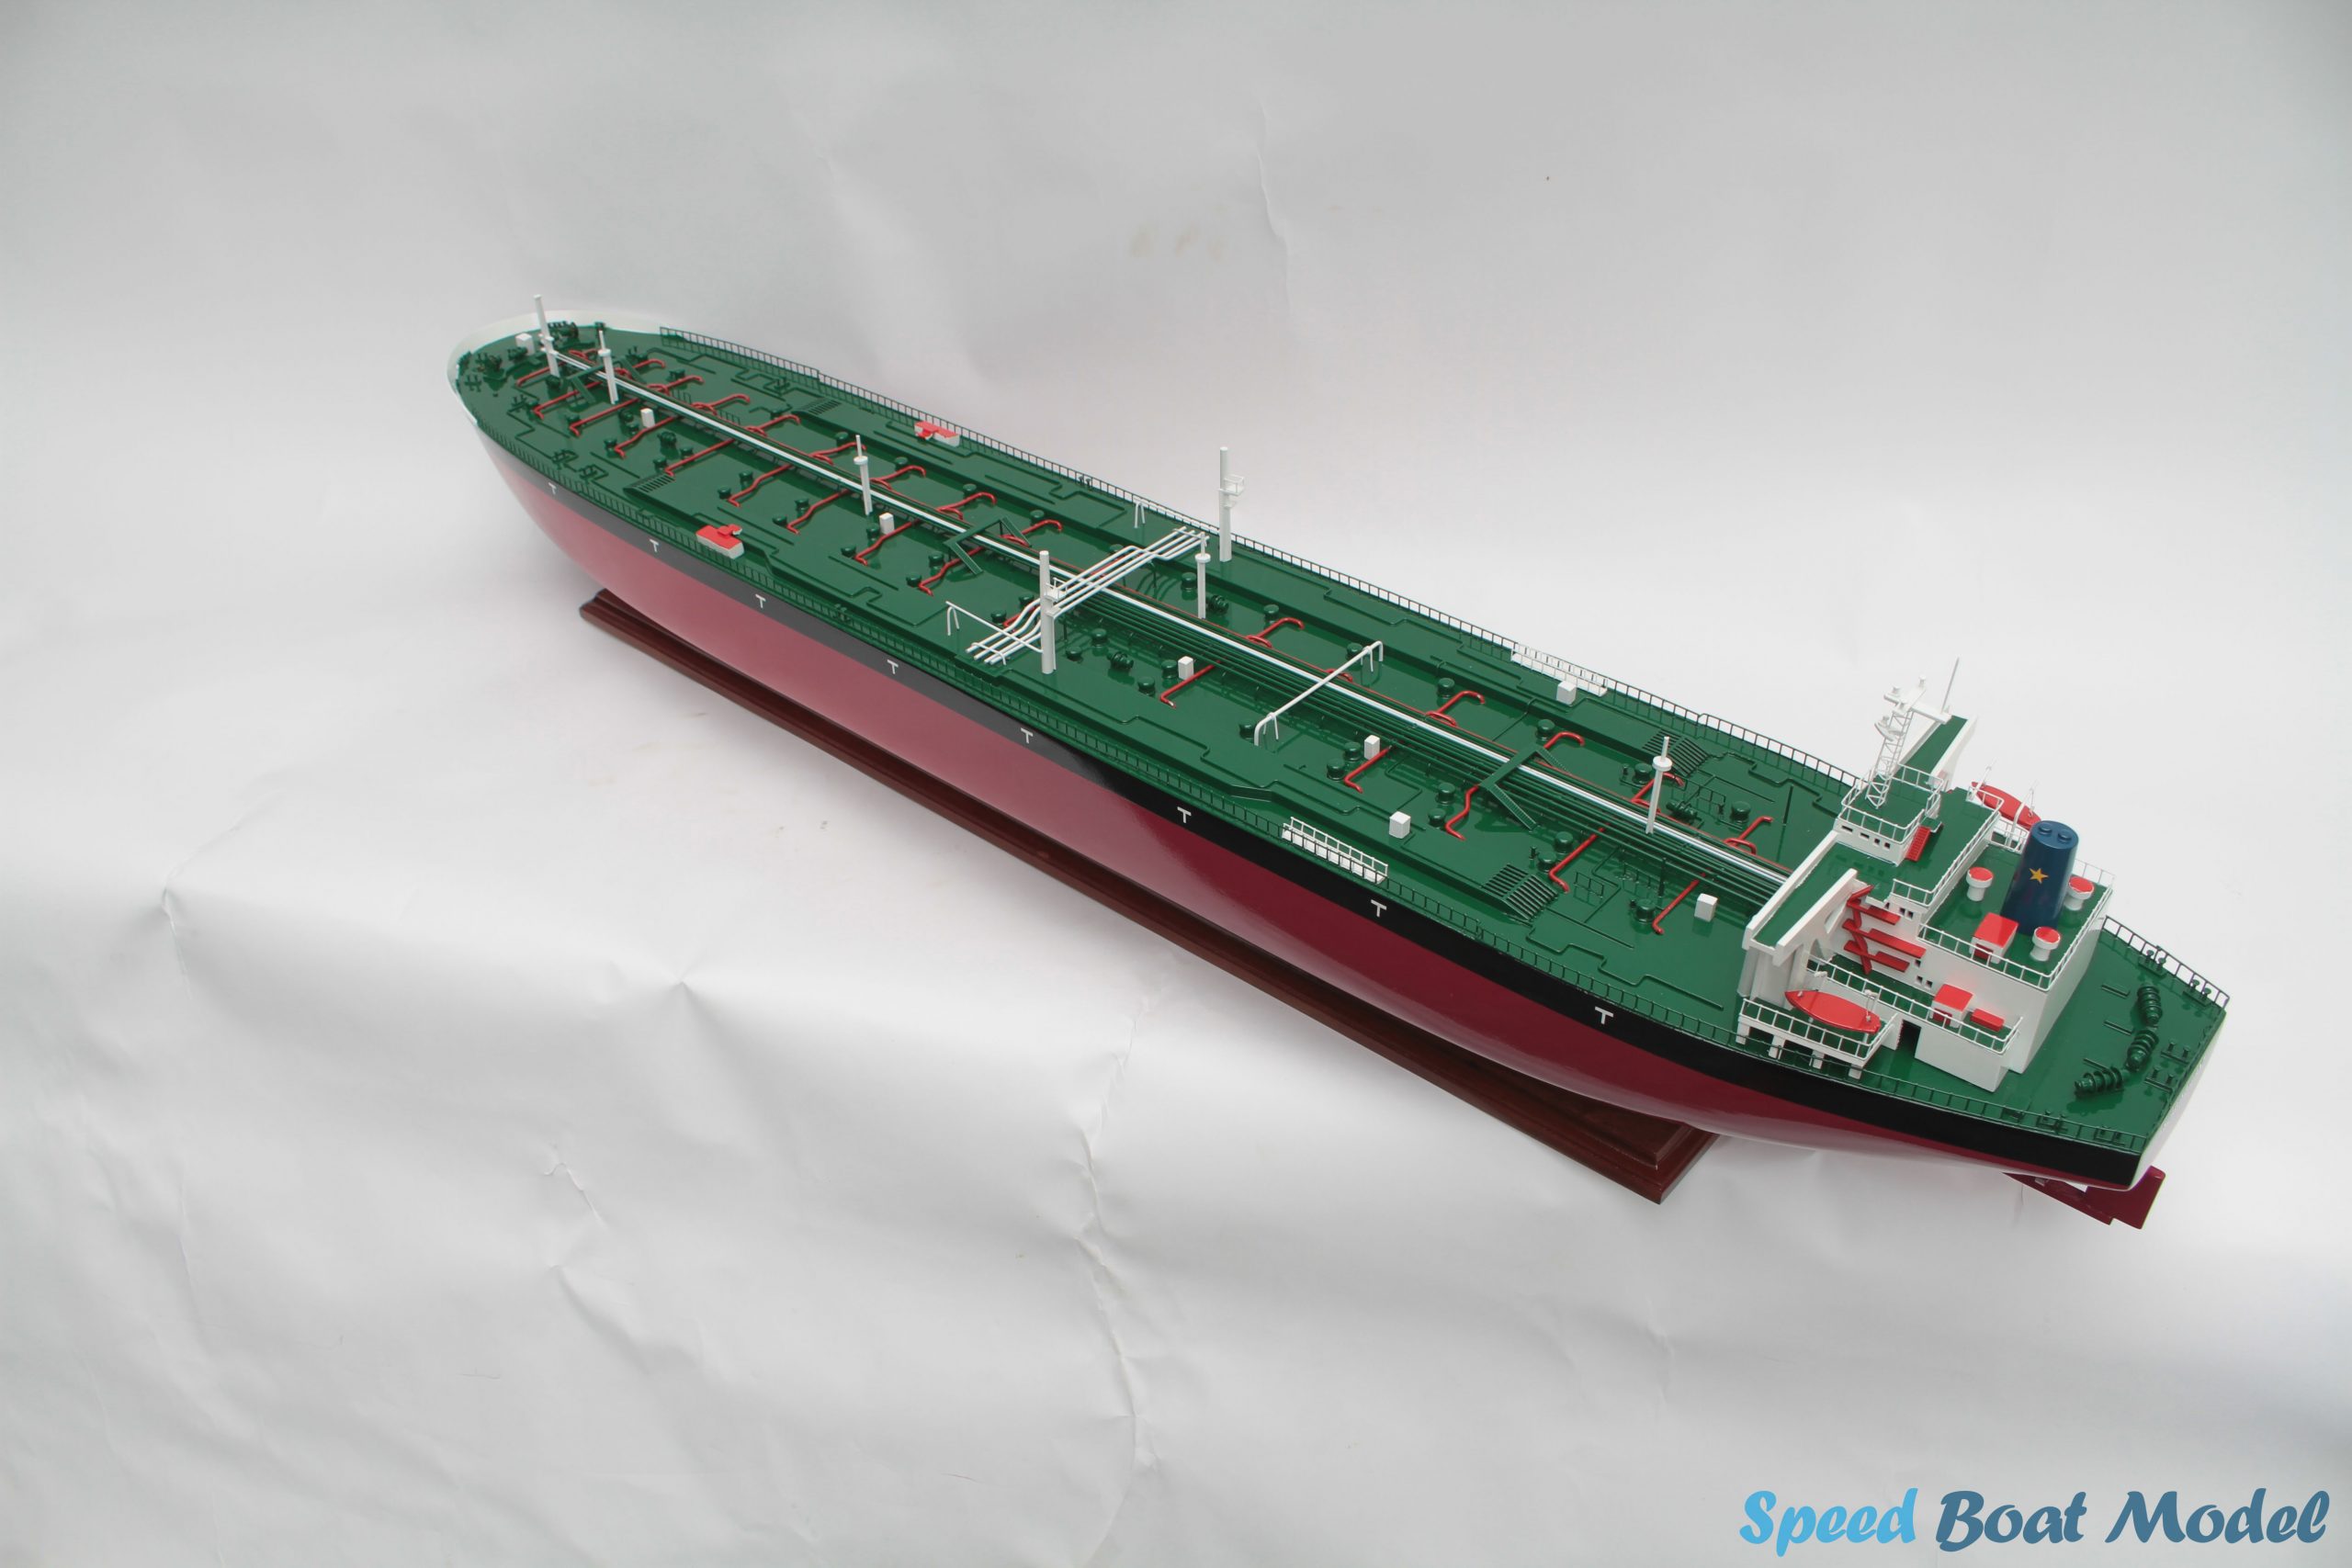 Seawise Giant Commercial Ship Model 45.2